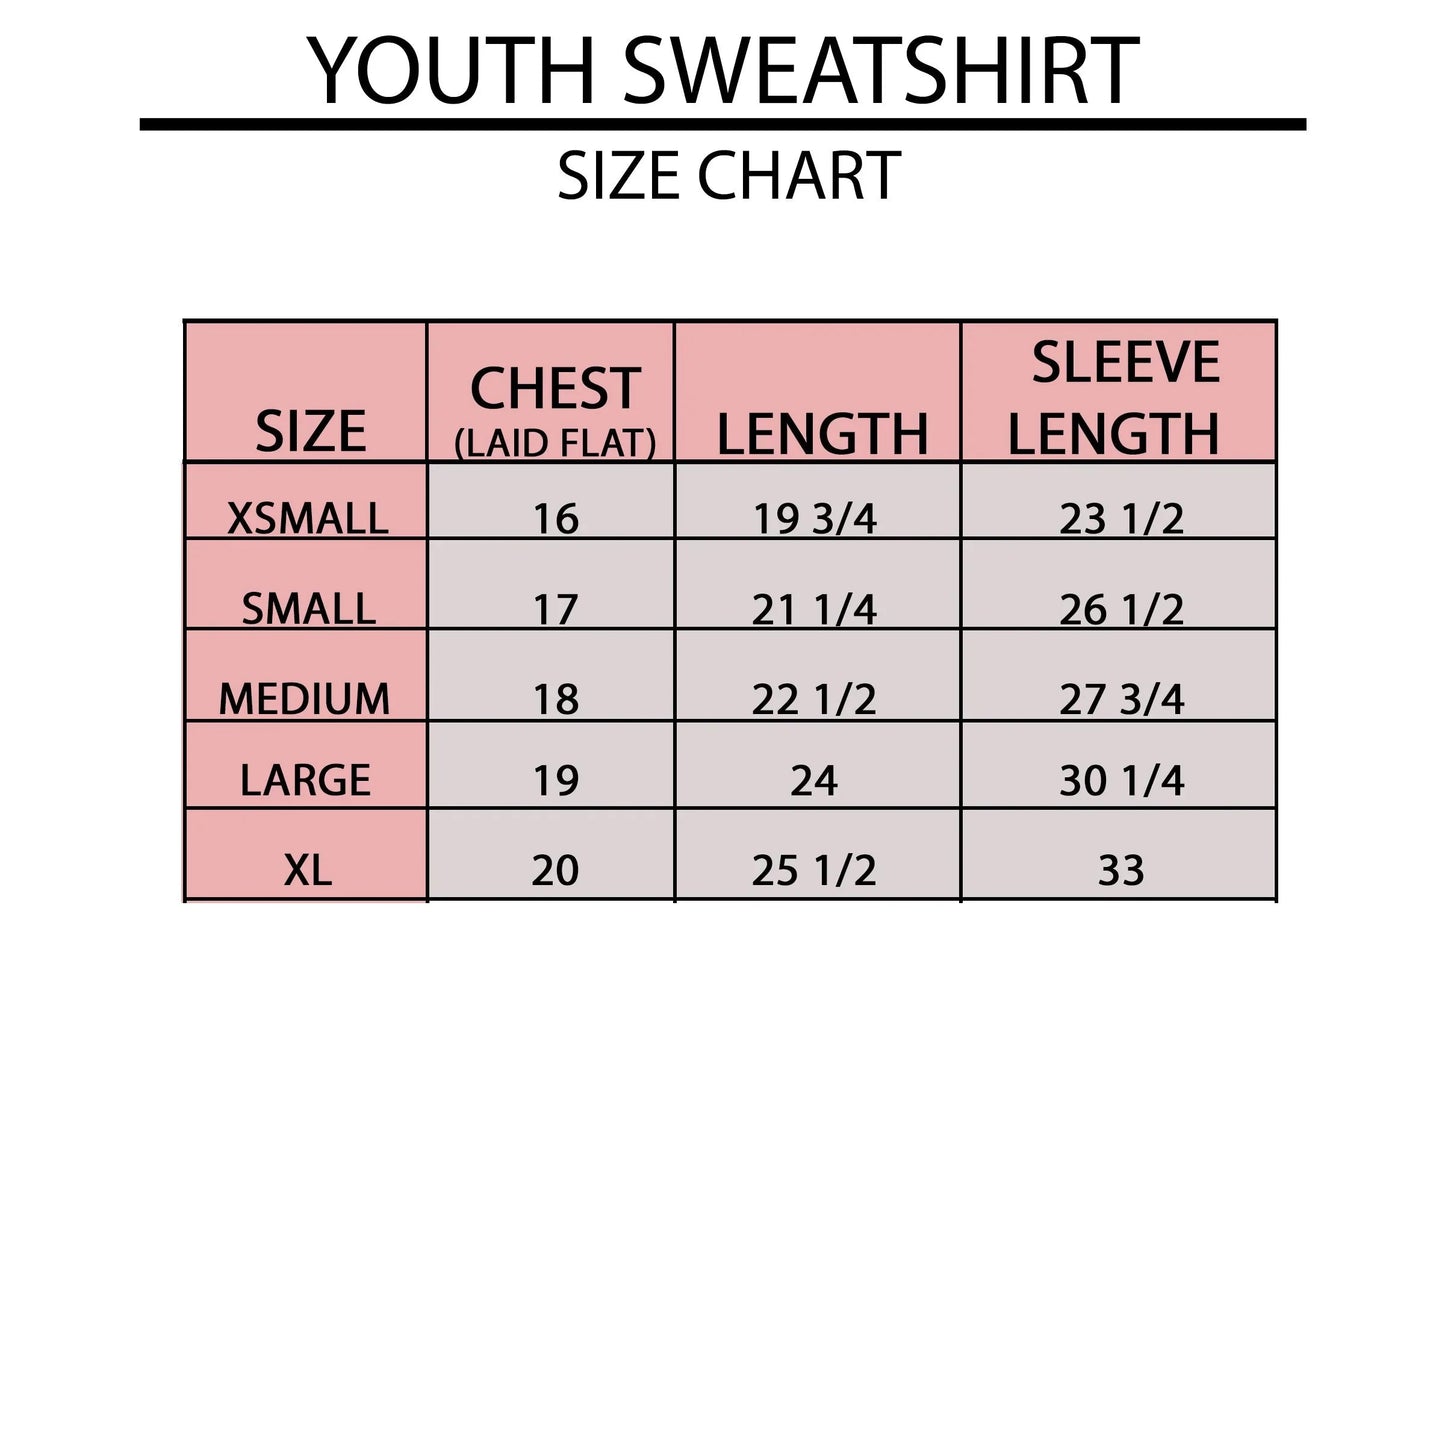 Eggstra Flower | Youth Sweatshirt